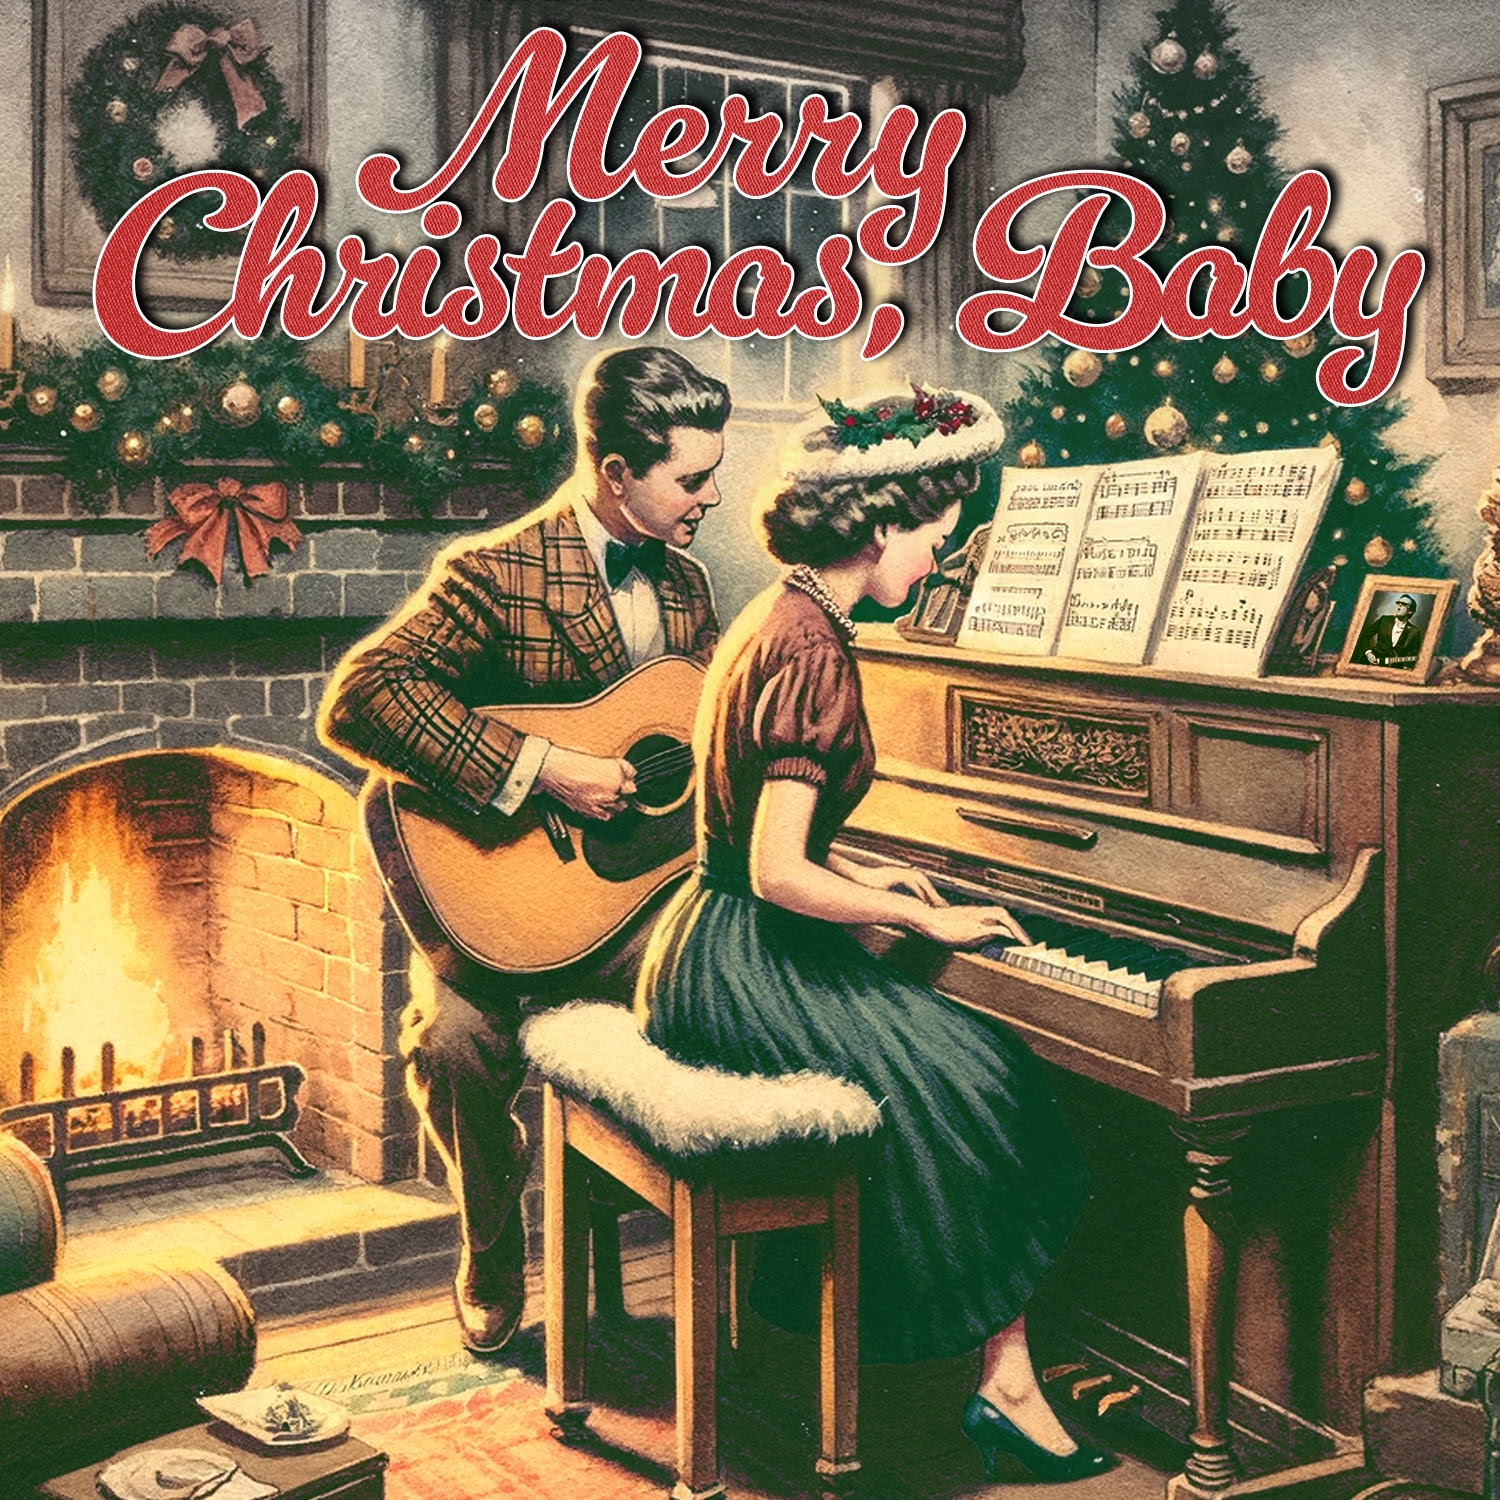 Joe Bonamassa Delights Fans With A Holiday Treat: "Merry Christmas, Baby" Digital Compilation Album